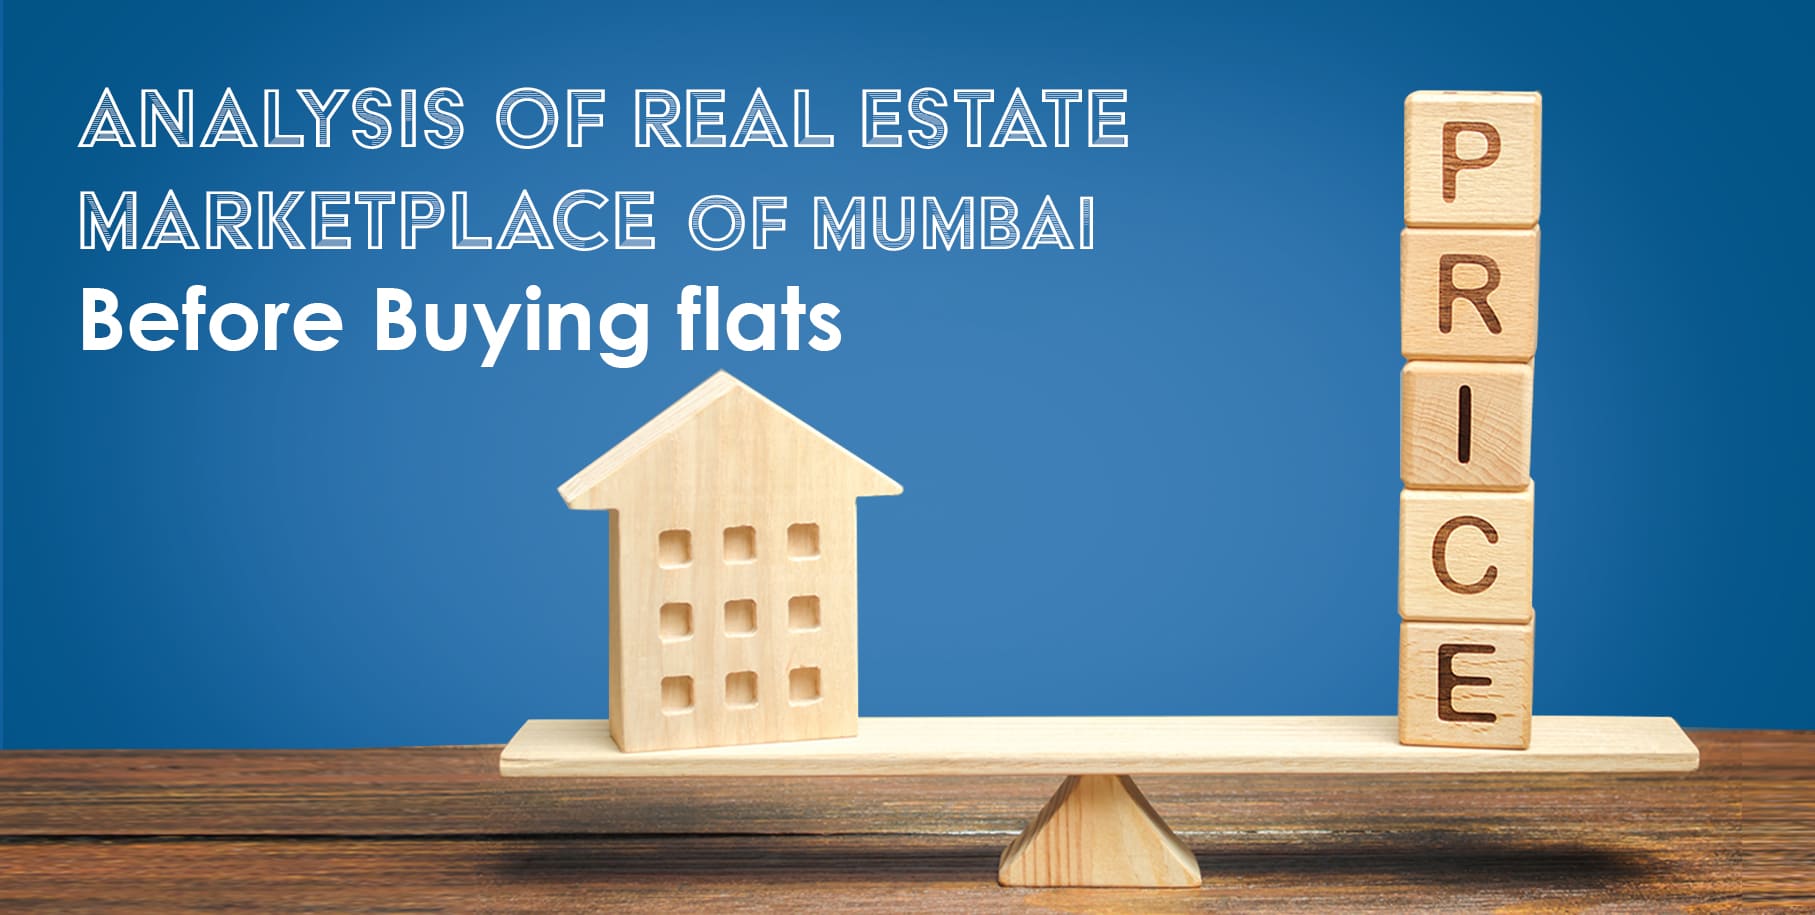 Analysis of Real Estate Marketplace of Mumbai before Buying Flats